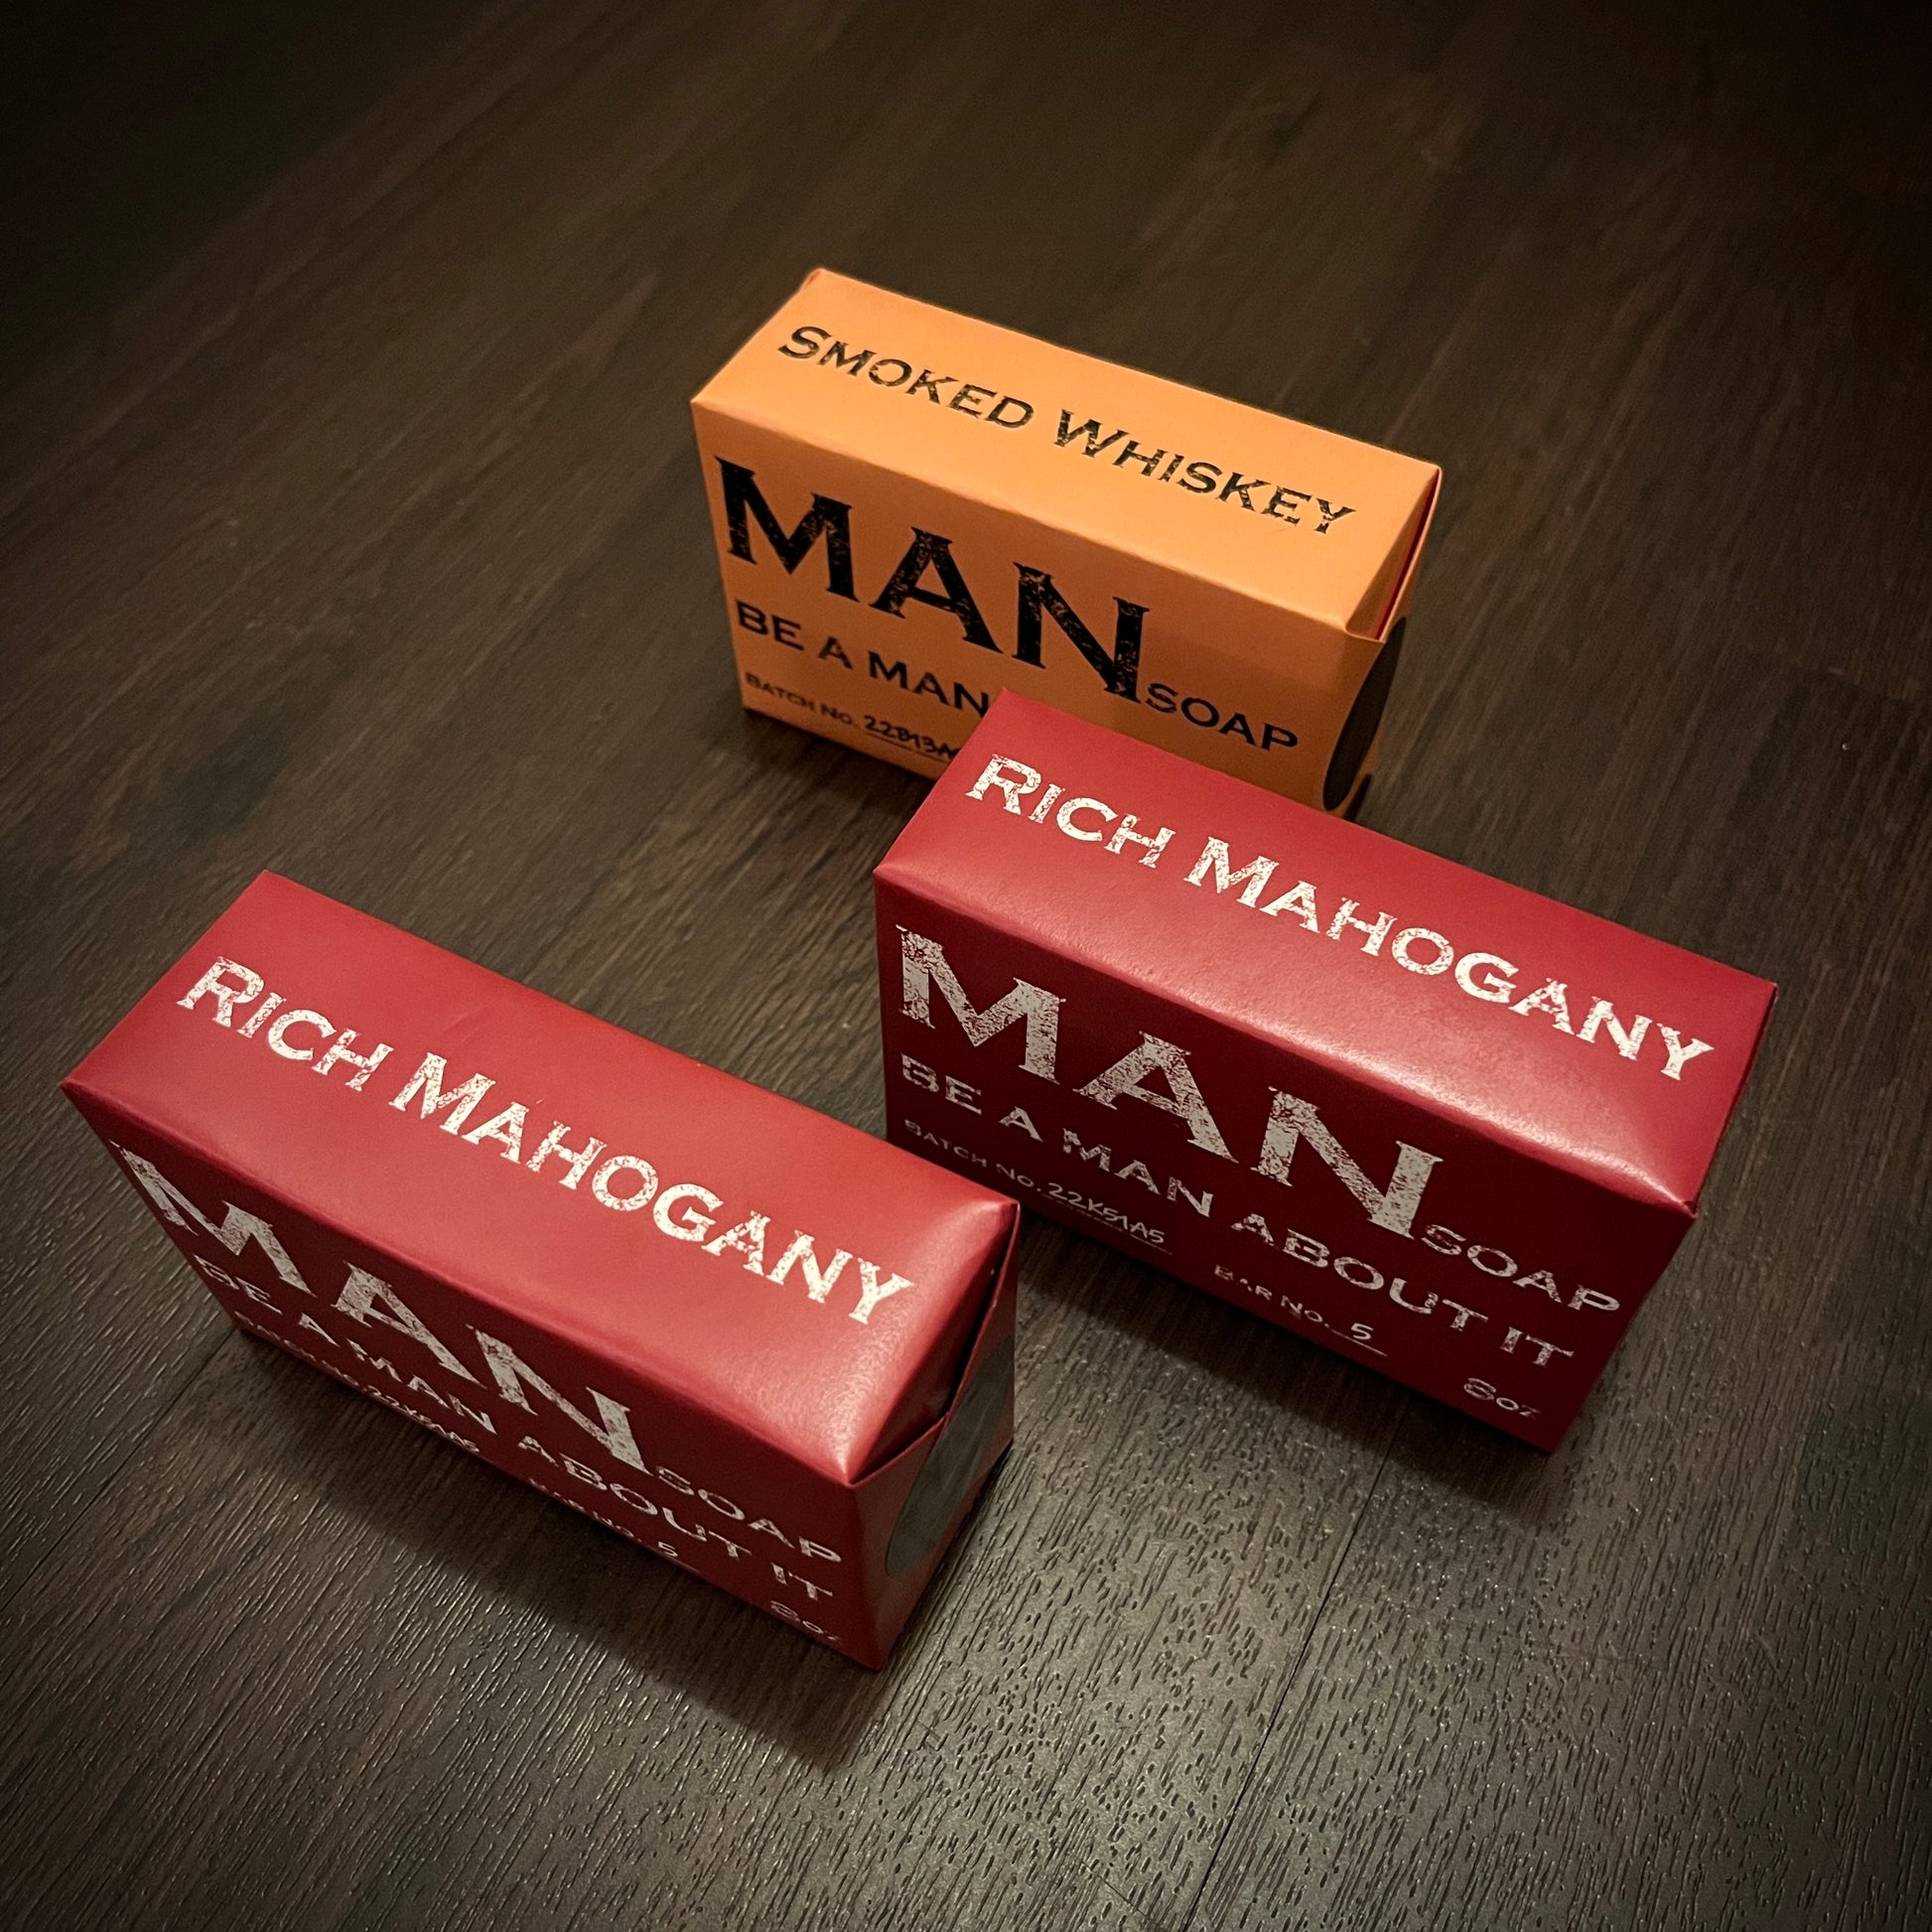 soap for men